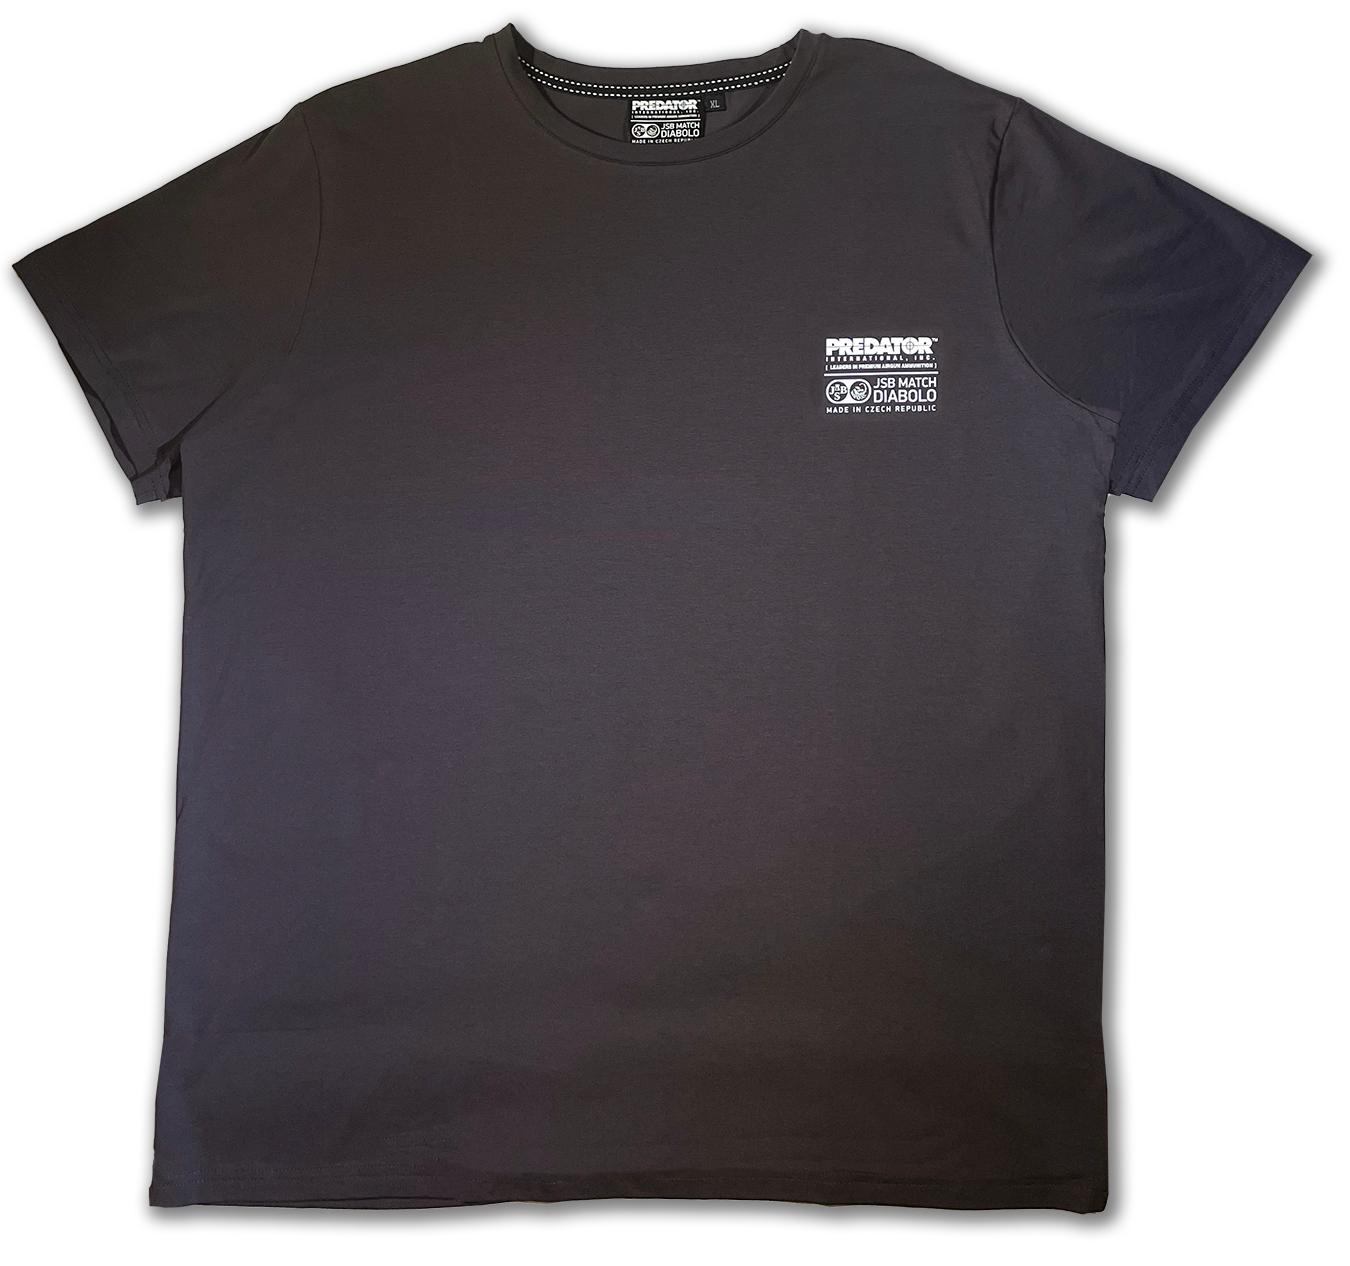 Predator Short Sleeve Cotton/Spandex T-Shirt